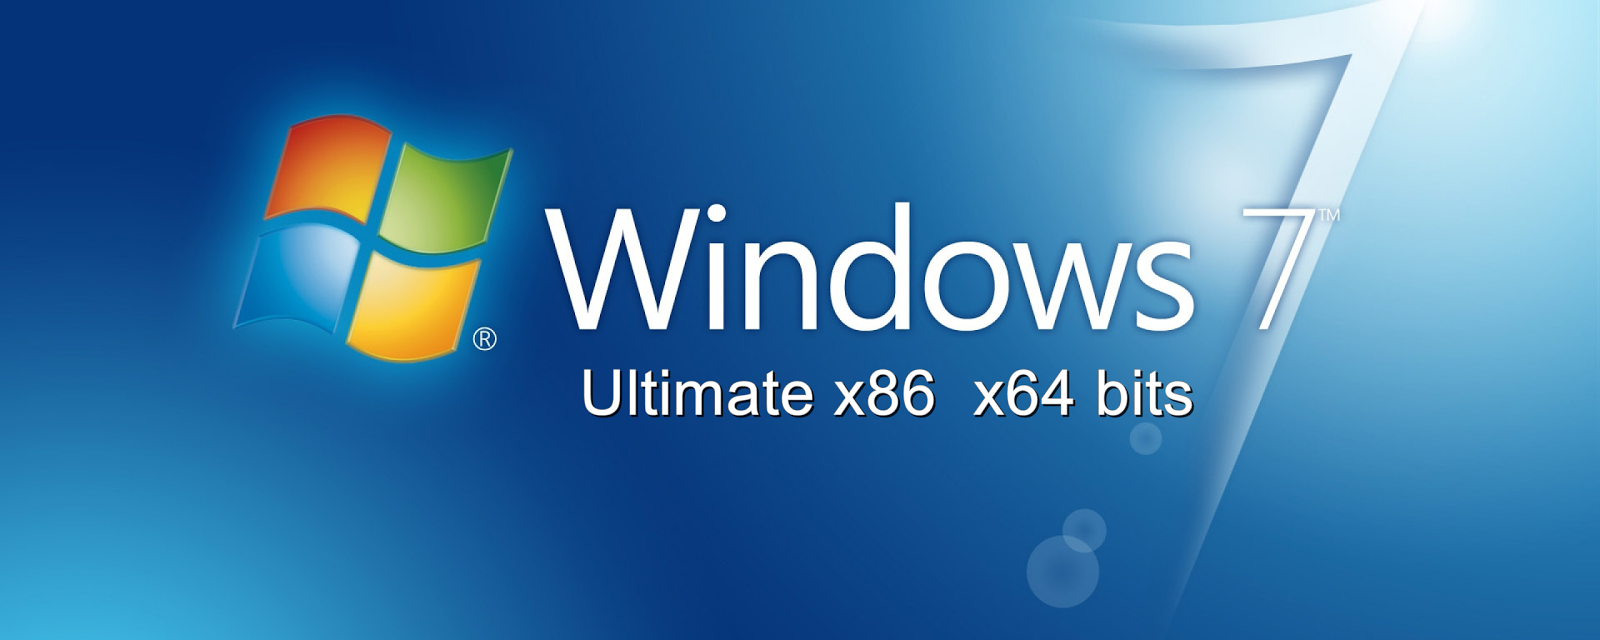 Windows 7 ultimate free download torrent file